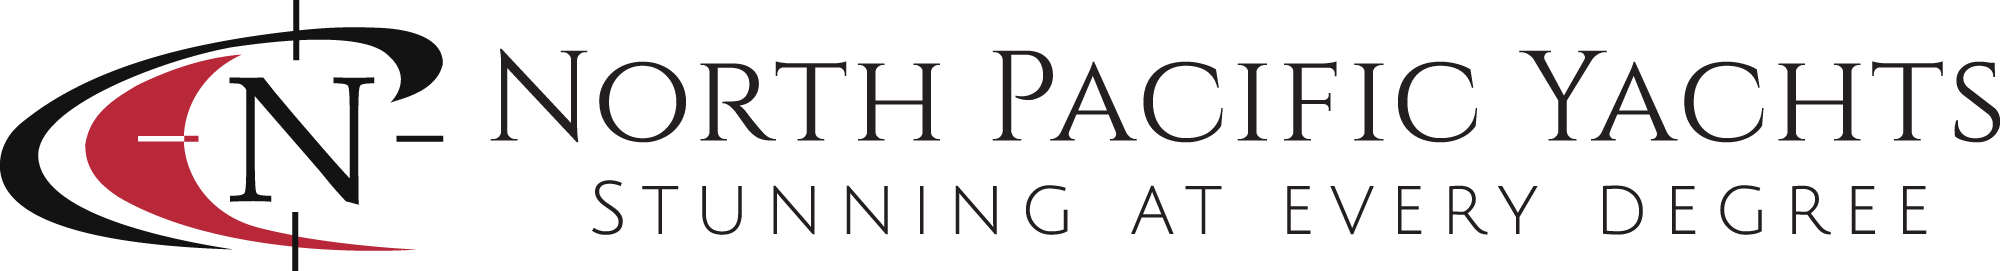 North Pacific logo